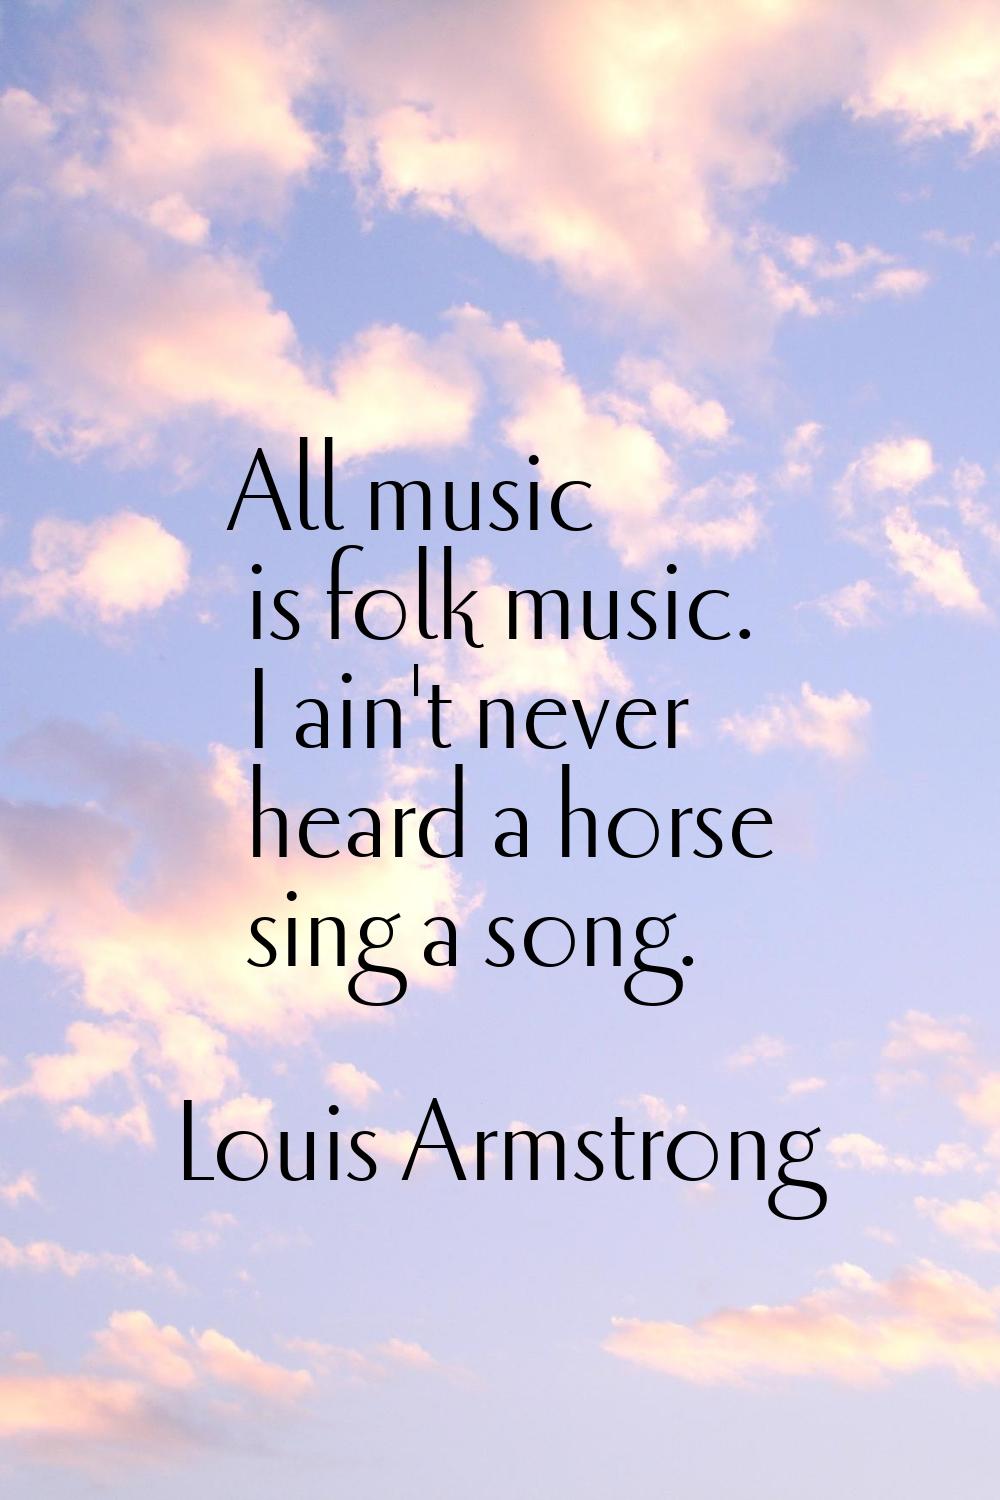 All music is folk music. I ain't never heard a horse sing a song.